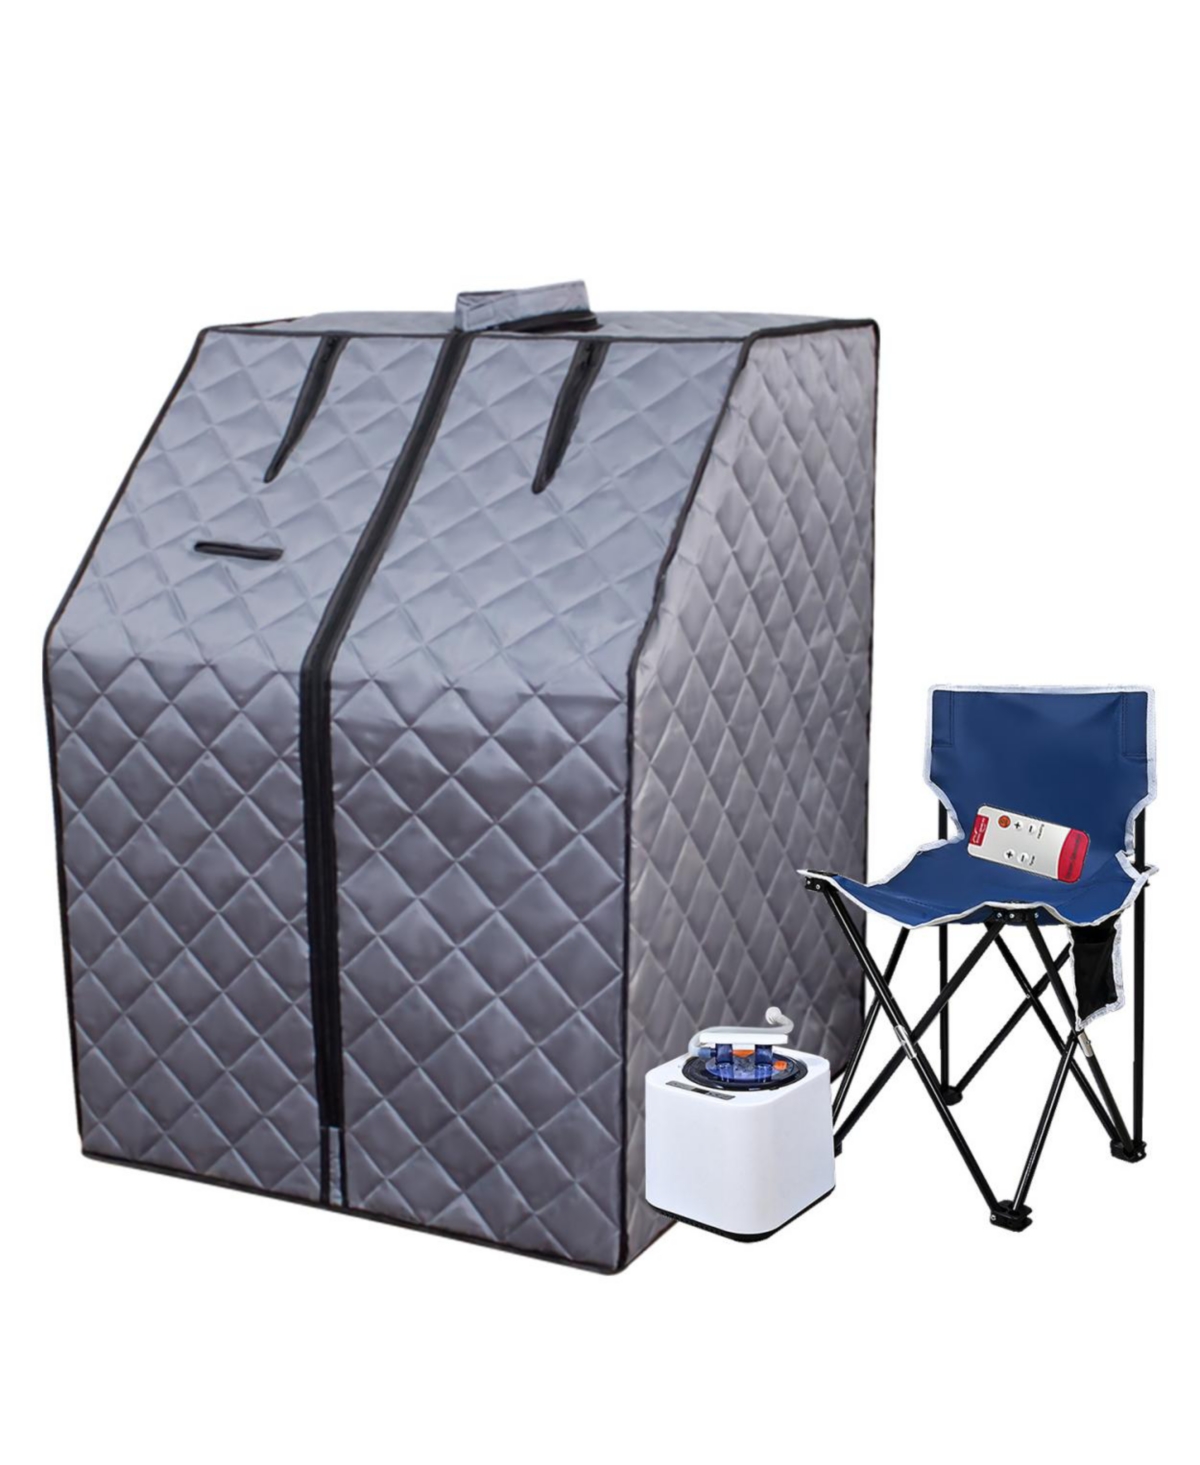 Sojourner Portable Sauna For Home - Steam Sauna Tent, Personal Sauna - Sauna Heater, Tent - Grey